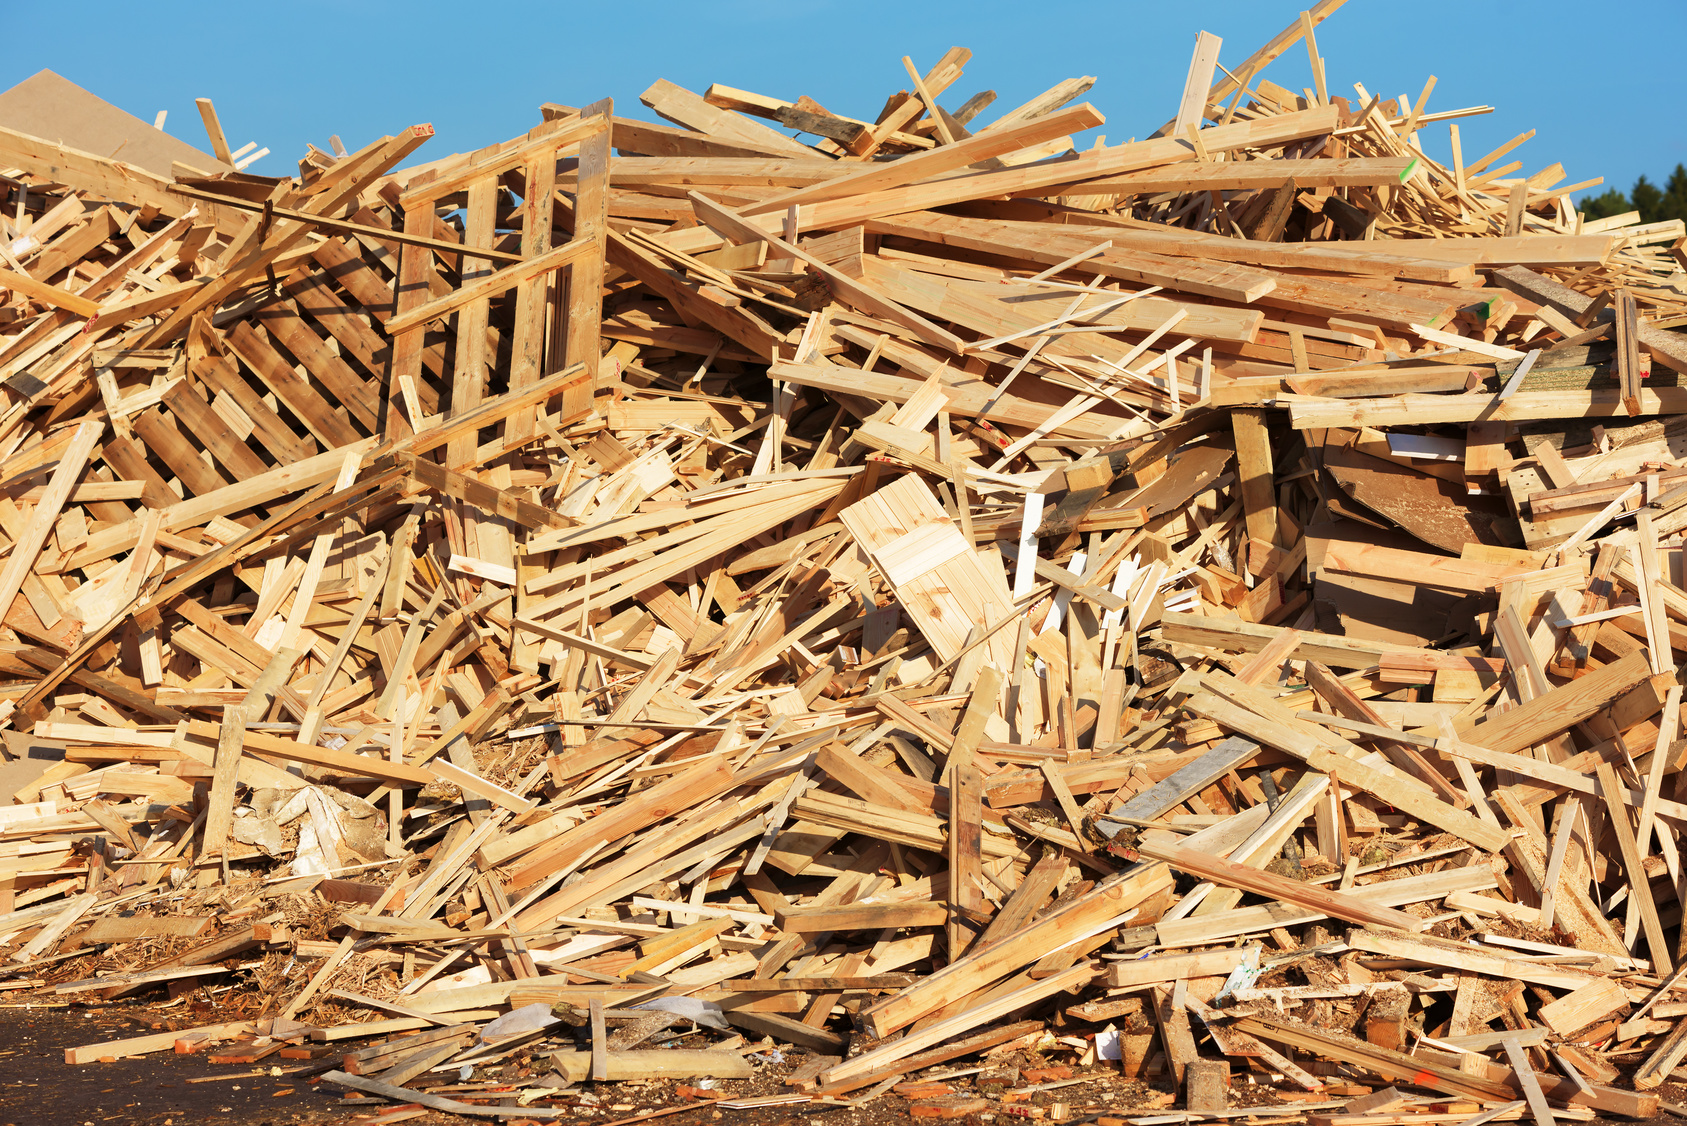 Biomass wood waste